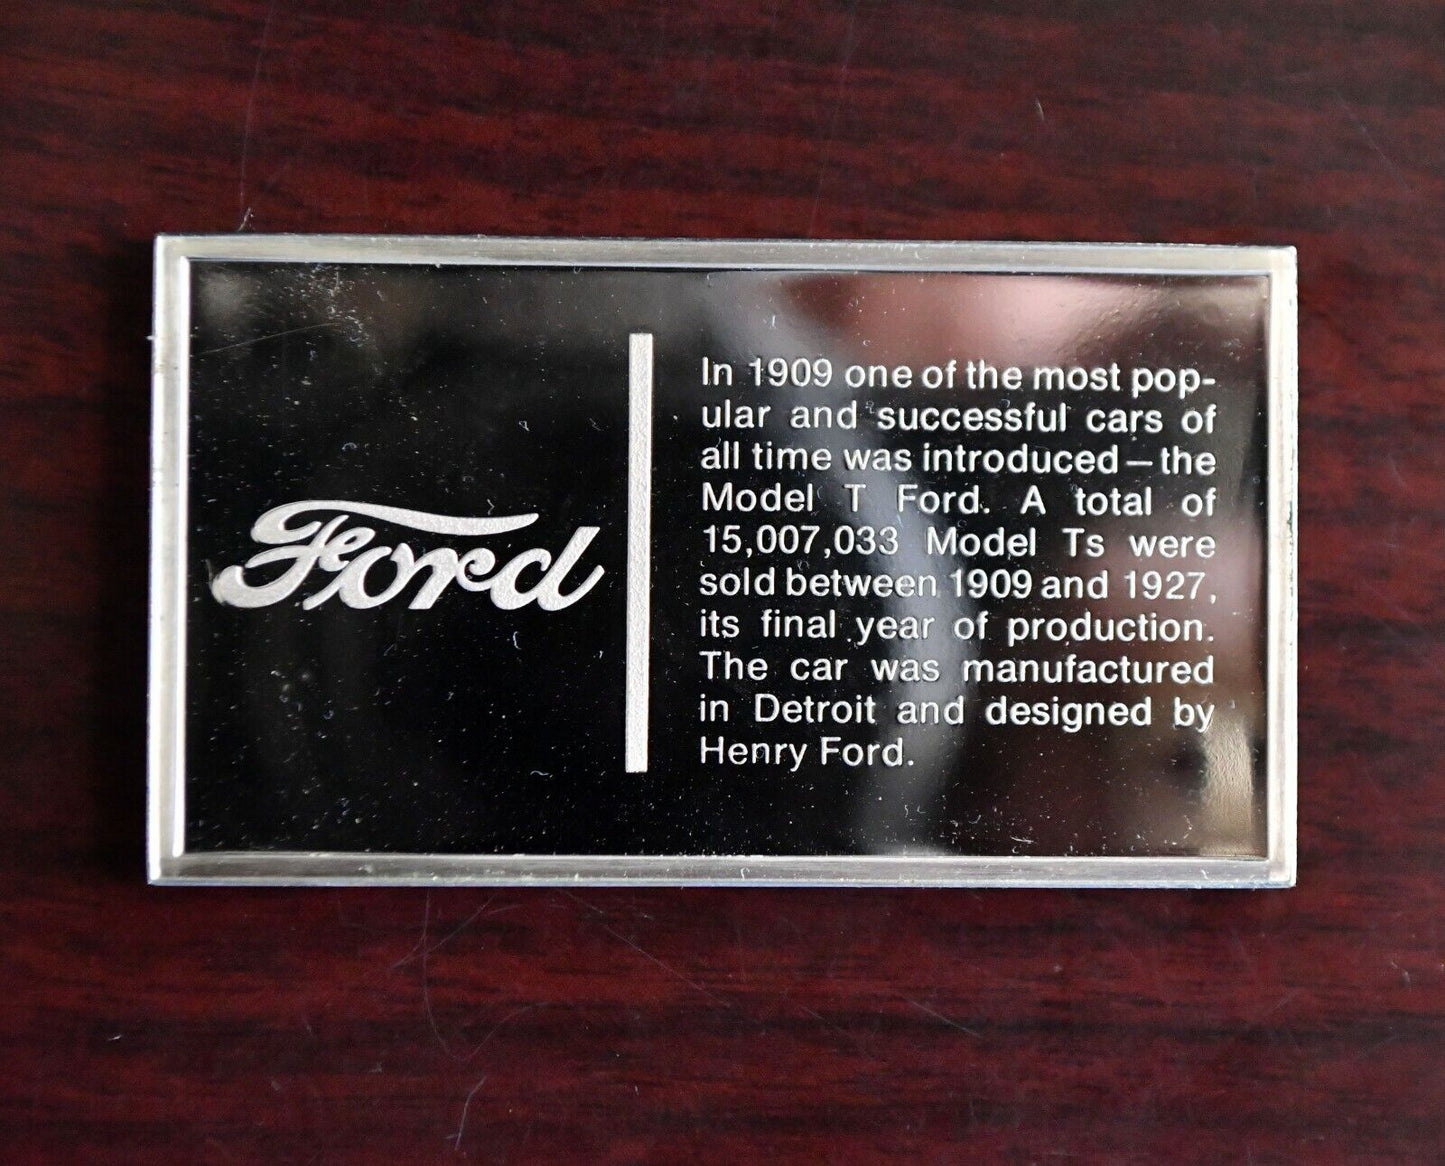 1909 Ford Centennial Car Ingot Collection 1000 Grain Sterling Franklin Mint